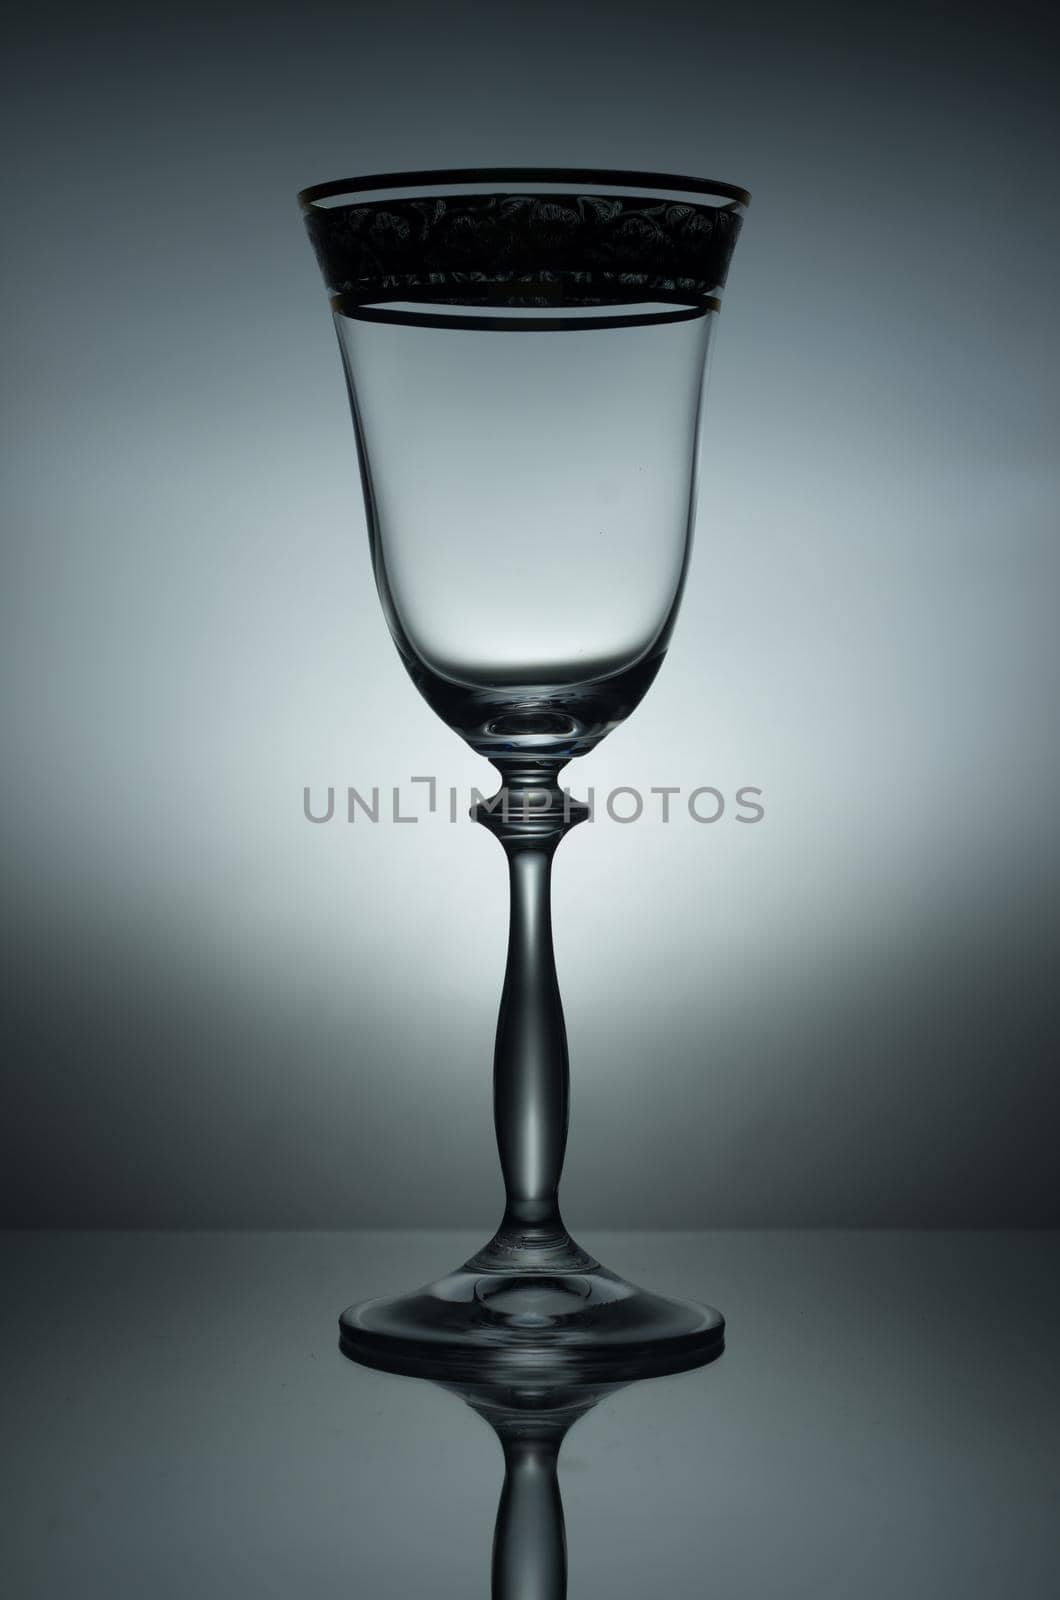 wine glass on a mirror background by Alexander_V